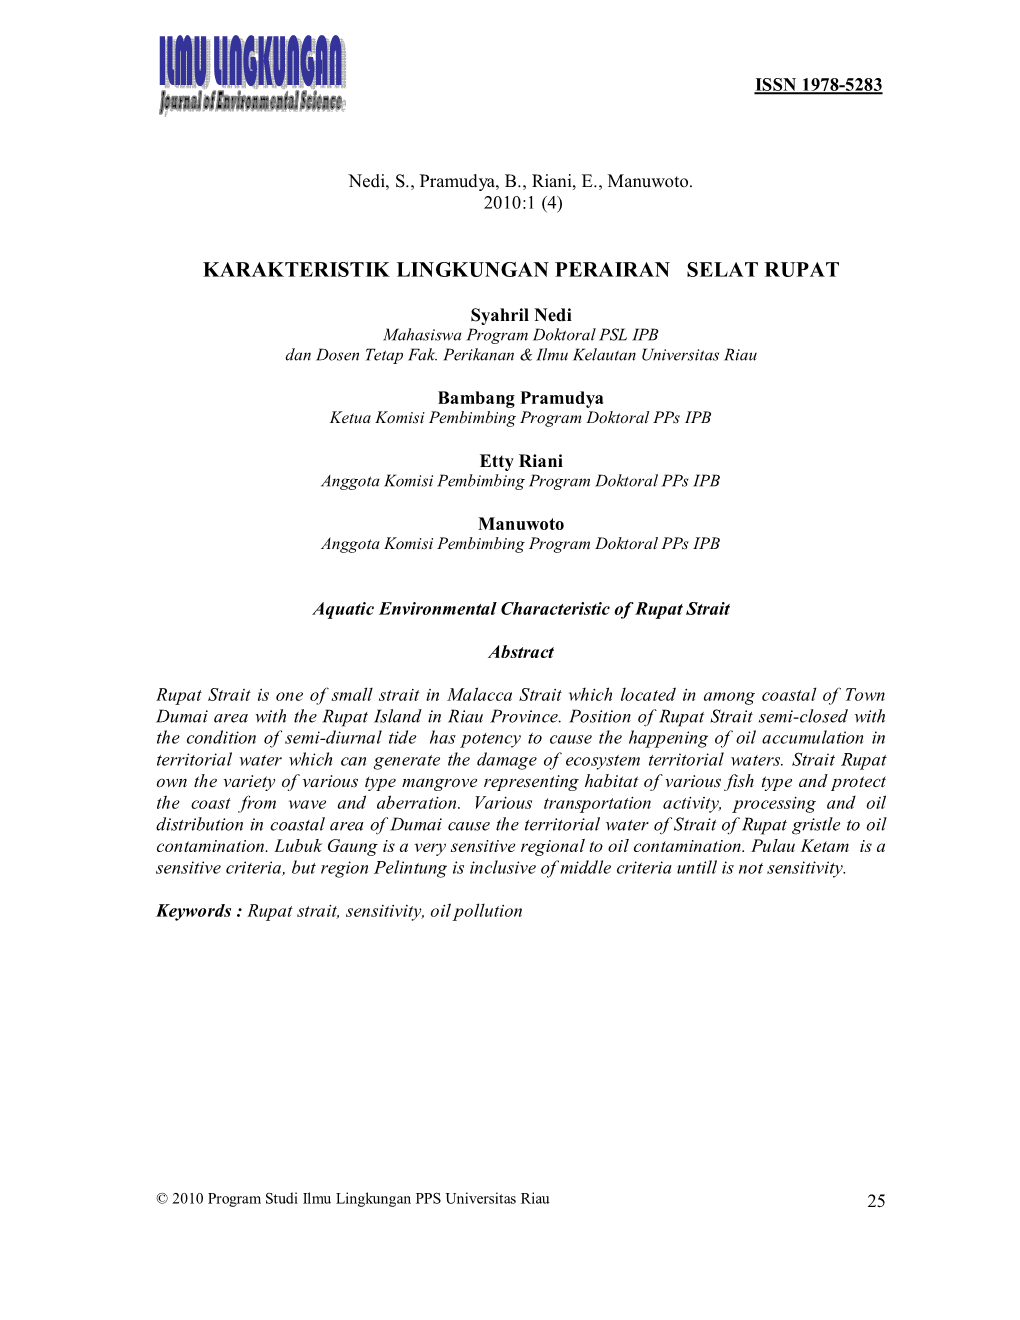 Karakteristik Lingkungan Perairan Selat Rupat ISSN 1978-5283